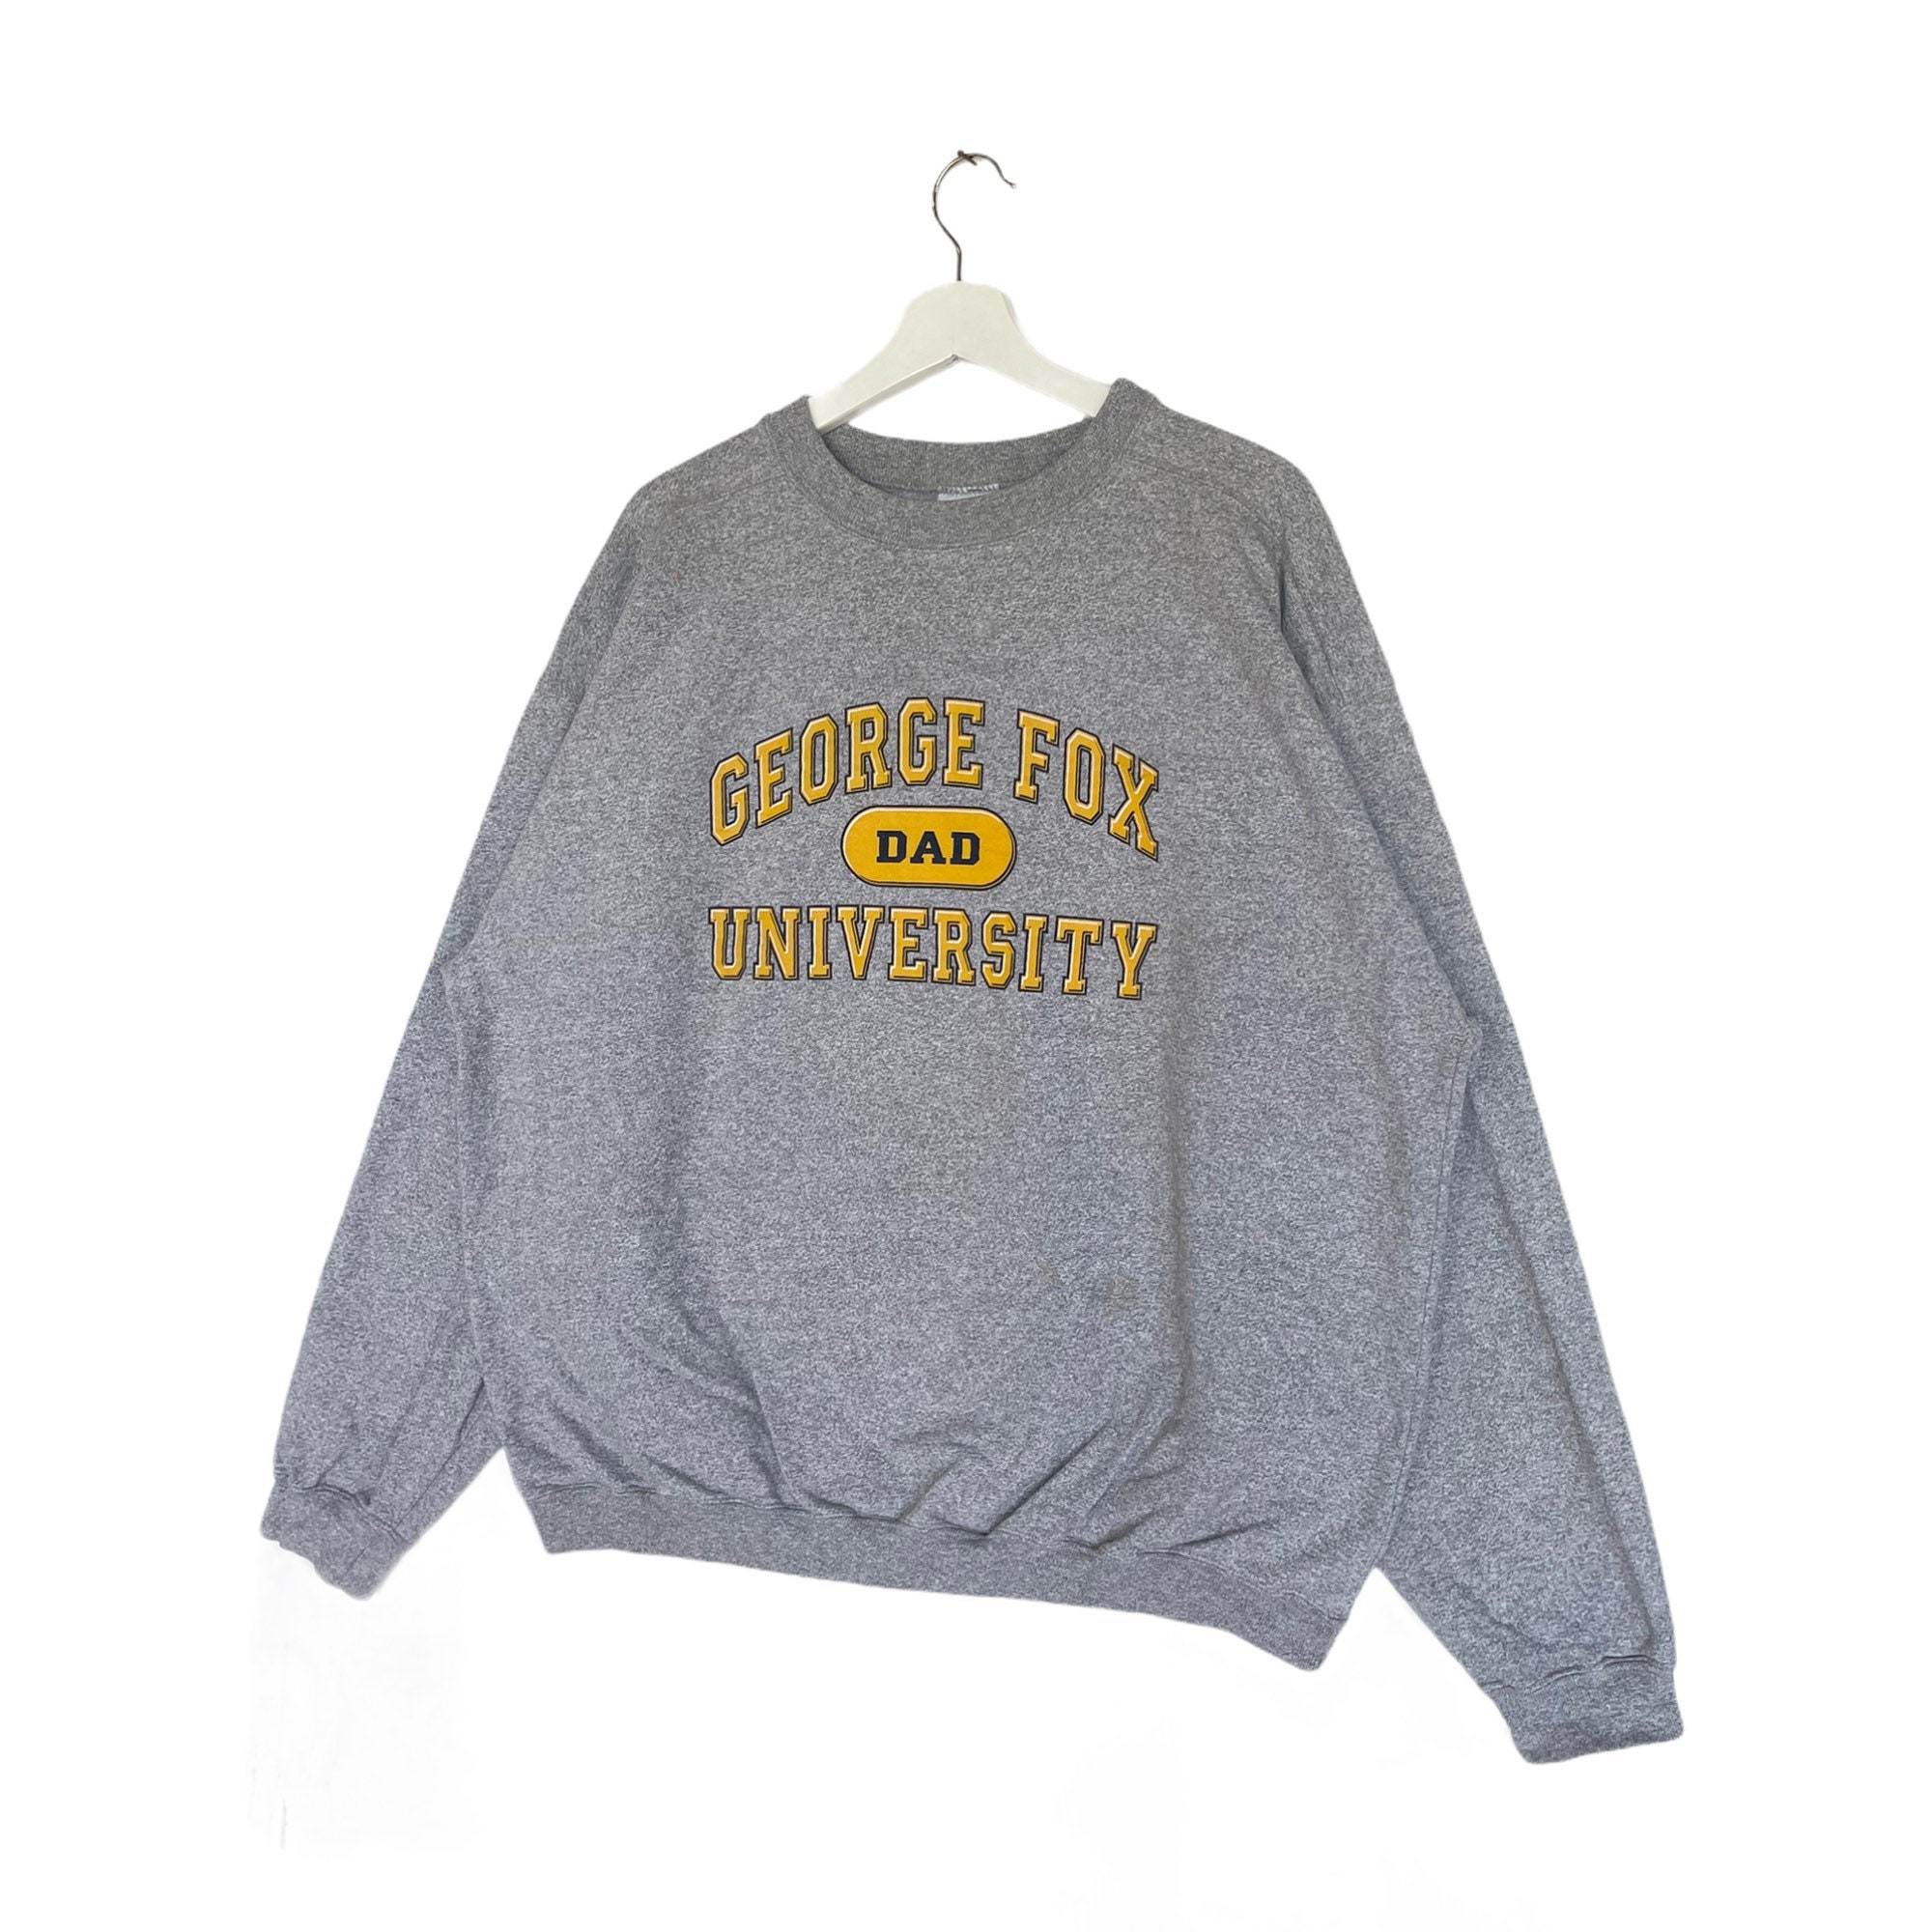 Vintage George Fox Dad University Sweatshirt Crewneck Jumper - Etsy UK